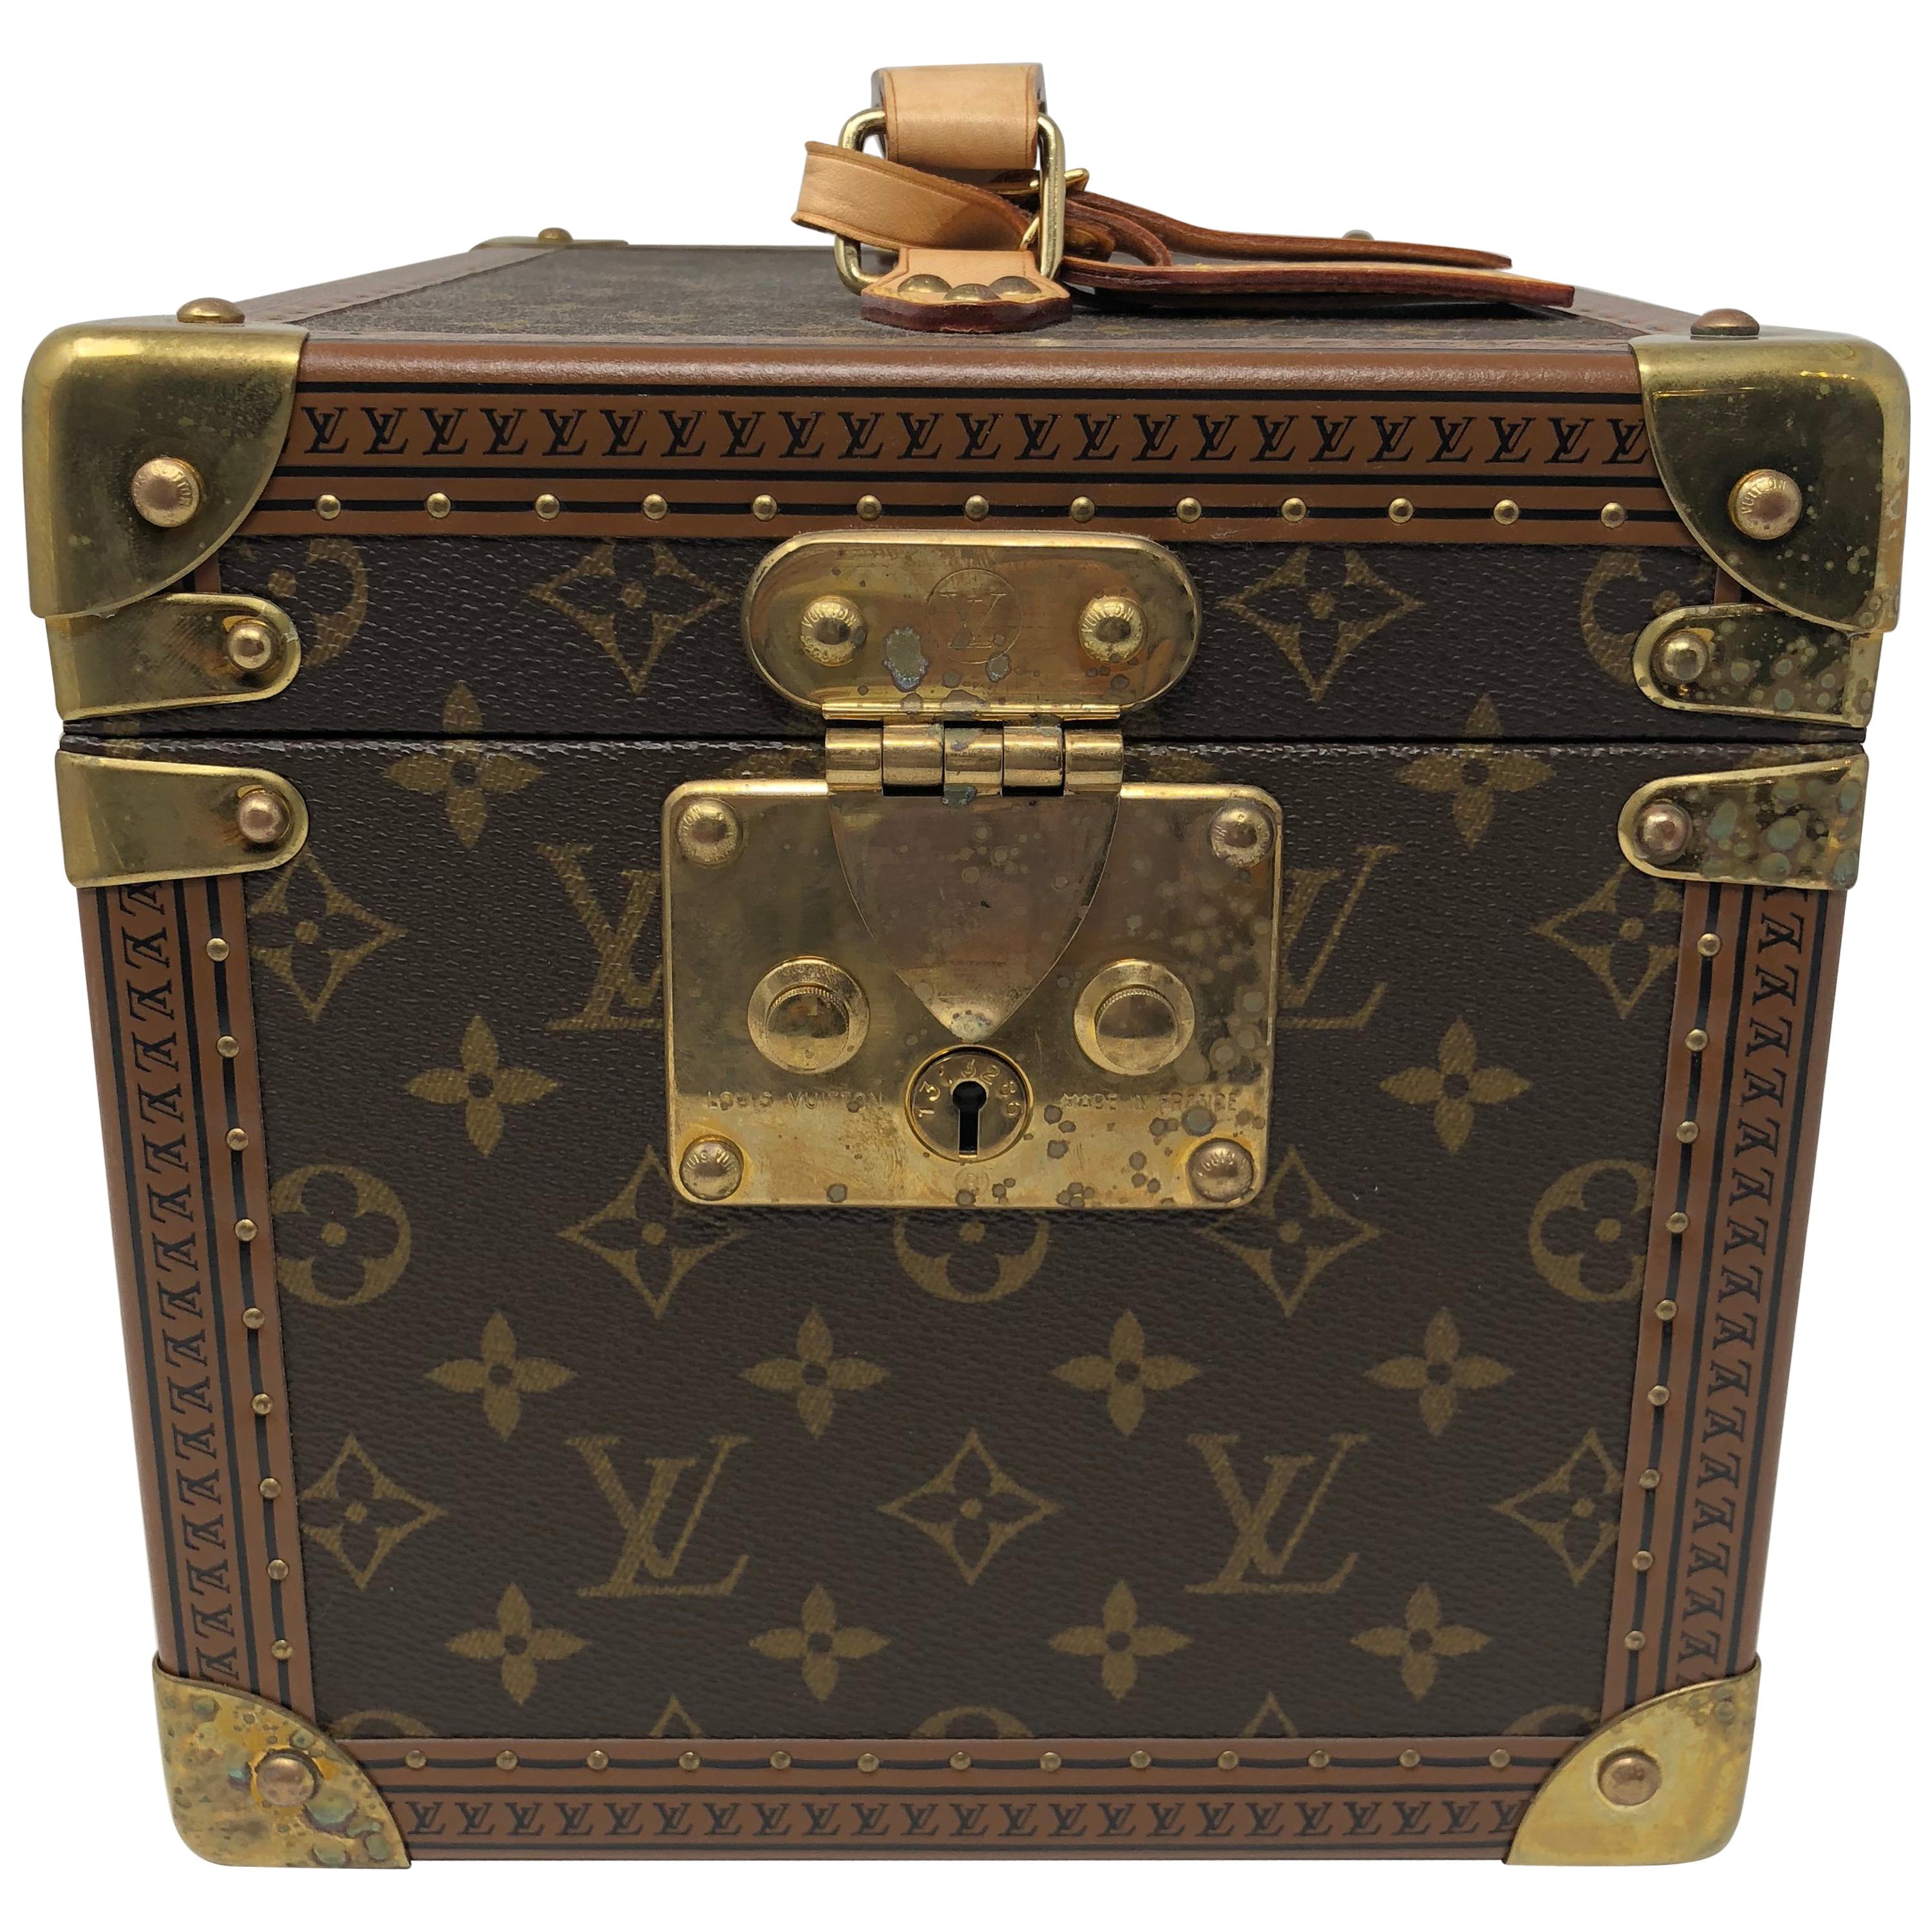 Louis Vuitton boite flacons damier 2020 model - Pinth Vintage Luggage